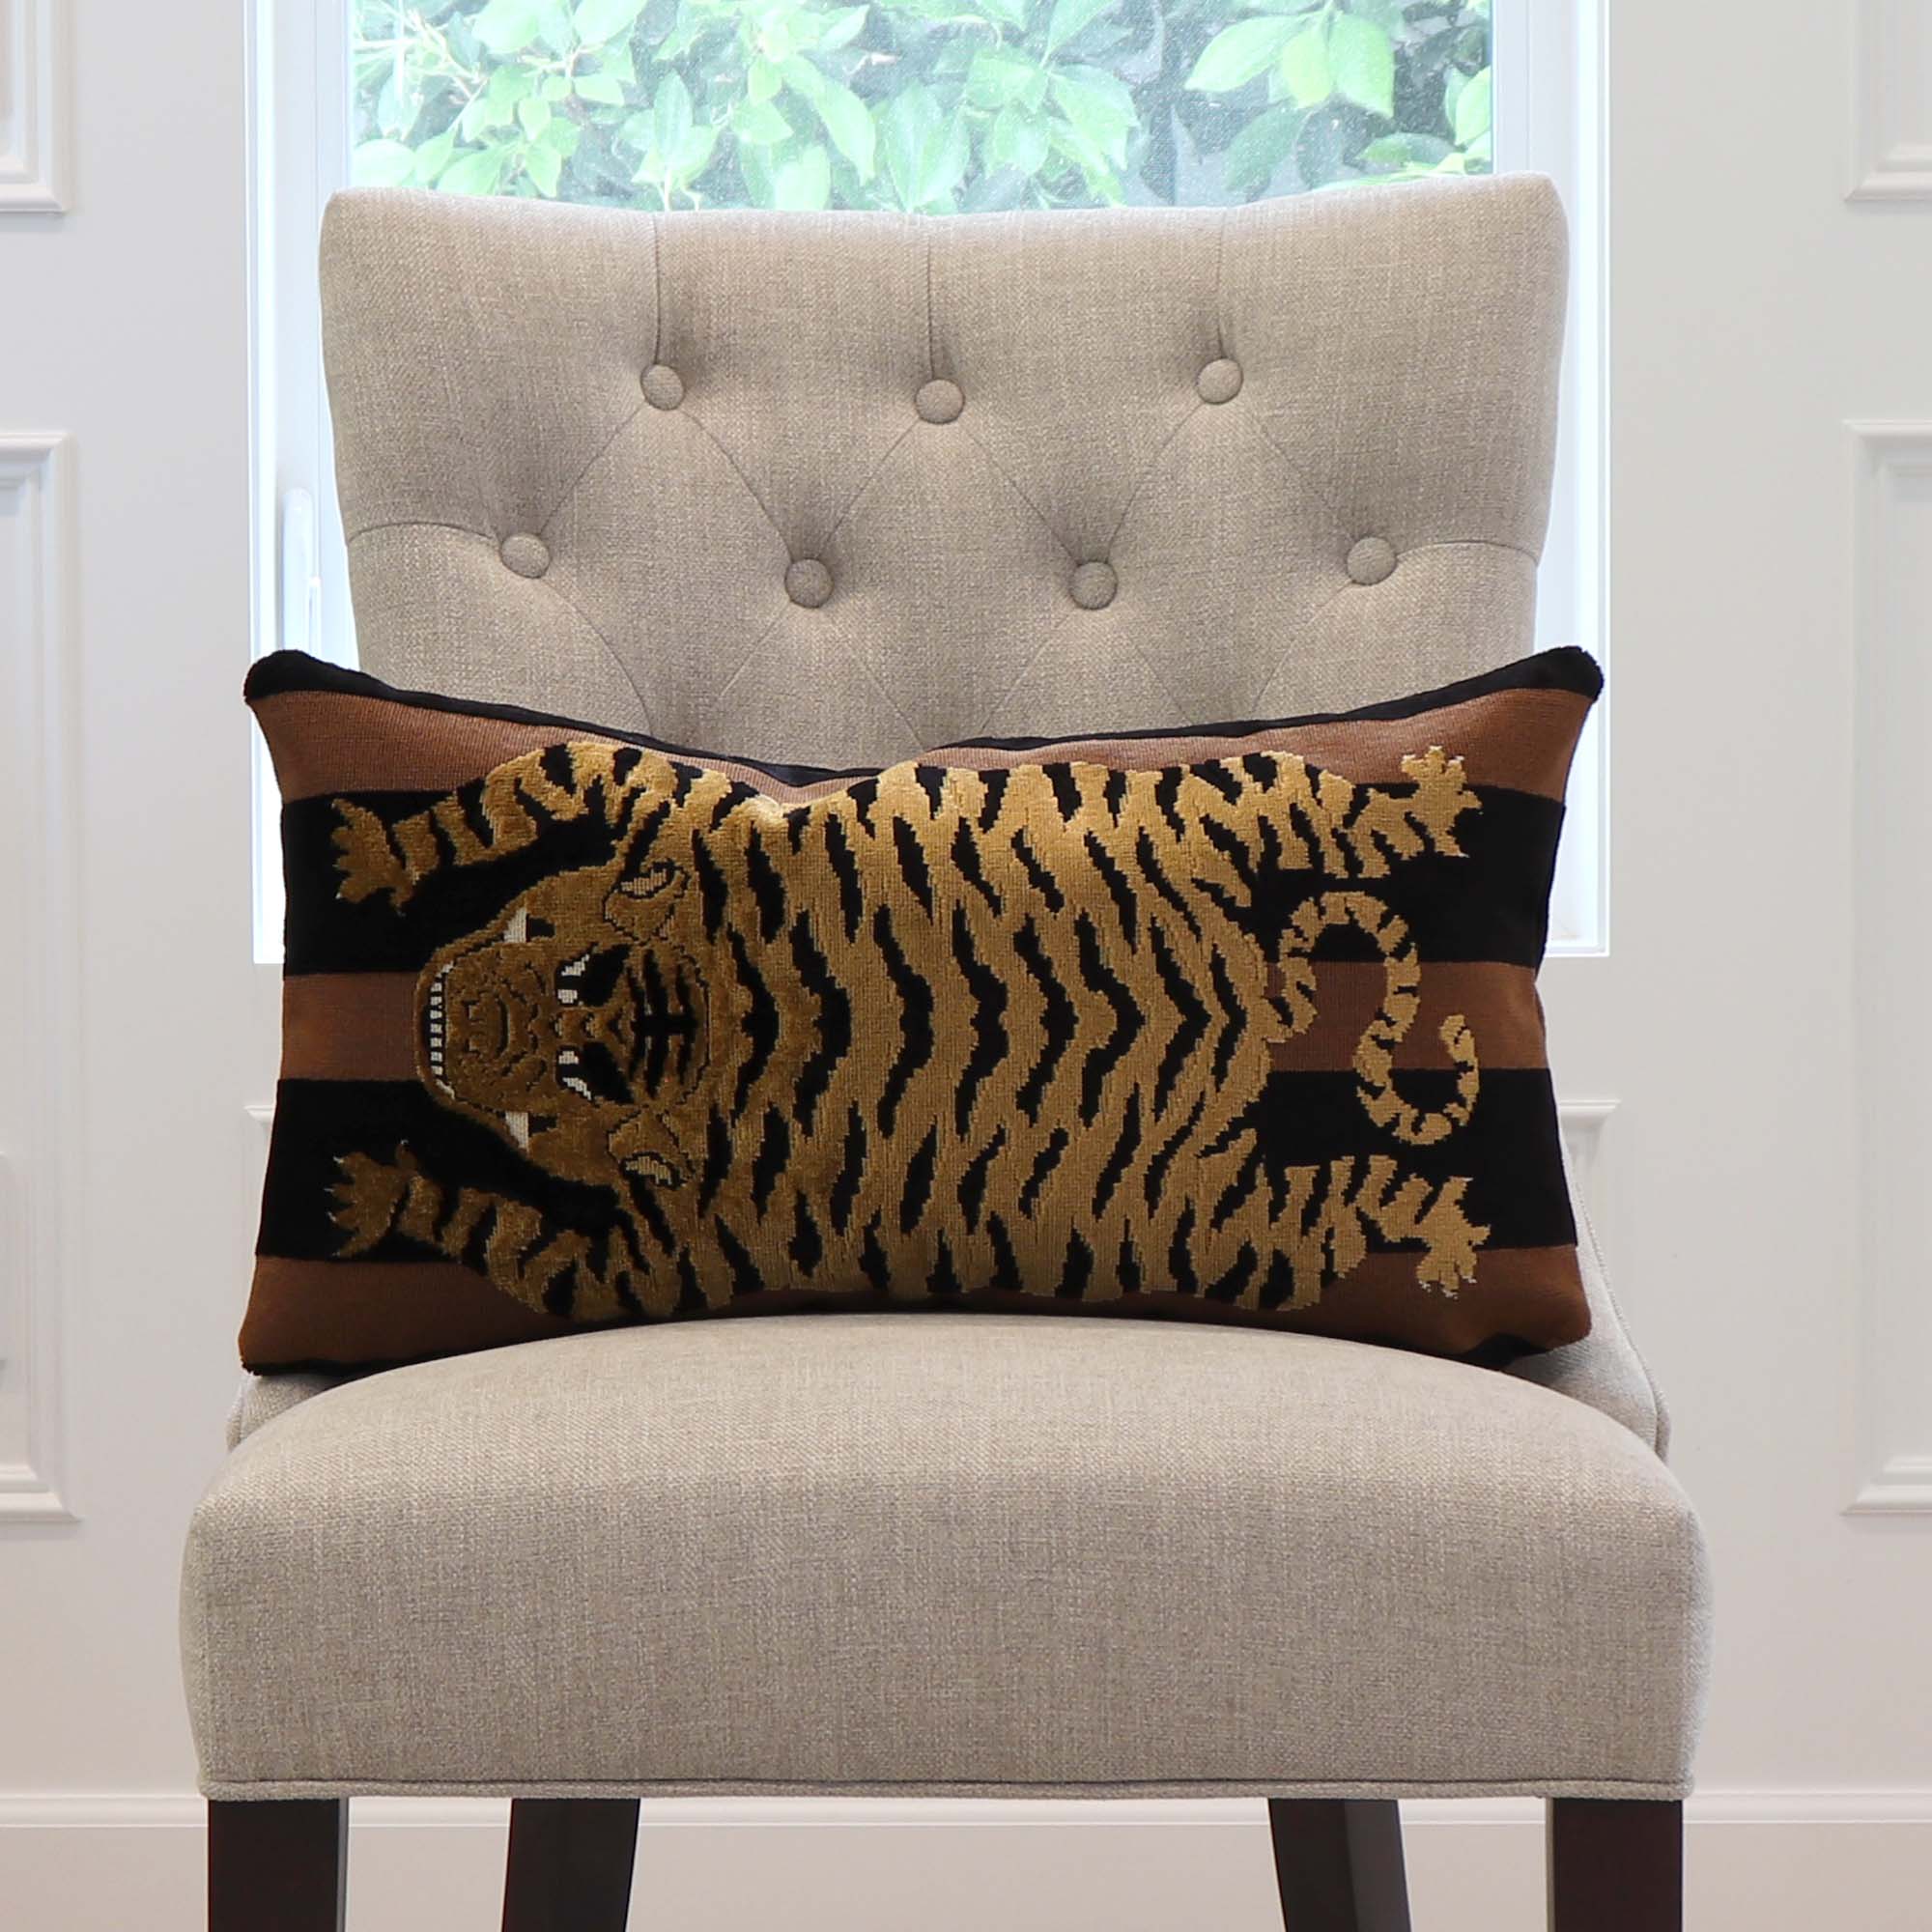 Schumacher Jokhang Tiger Velvet Brown / Black Luxury Designer Throw Pillow Cover on Dining Chair in Home